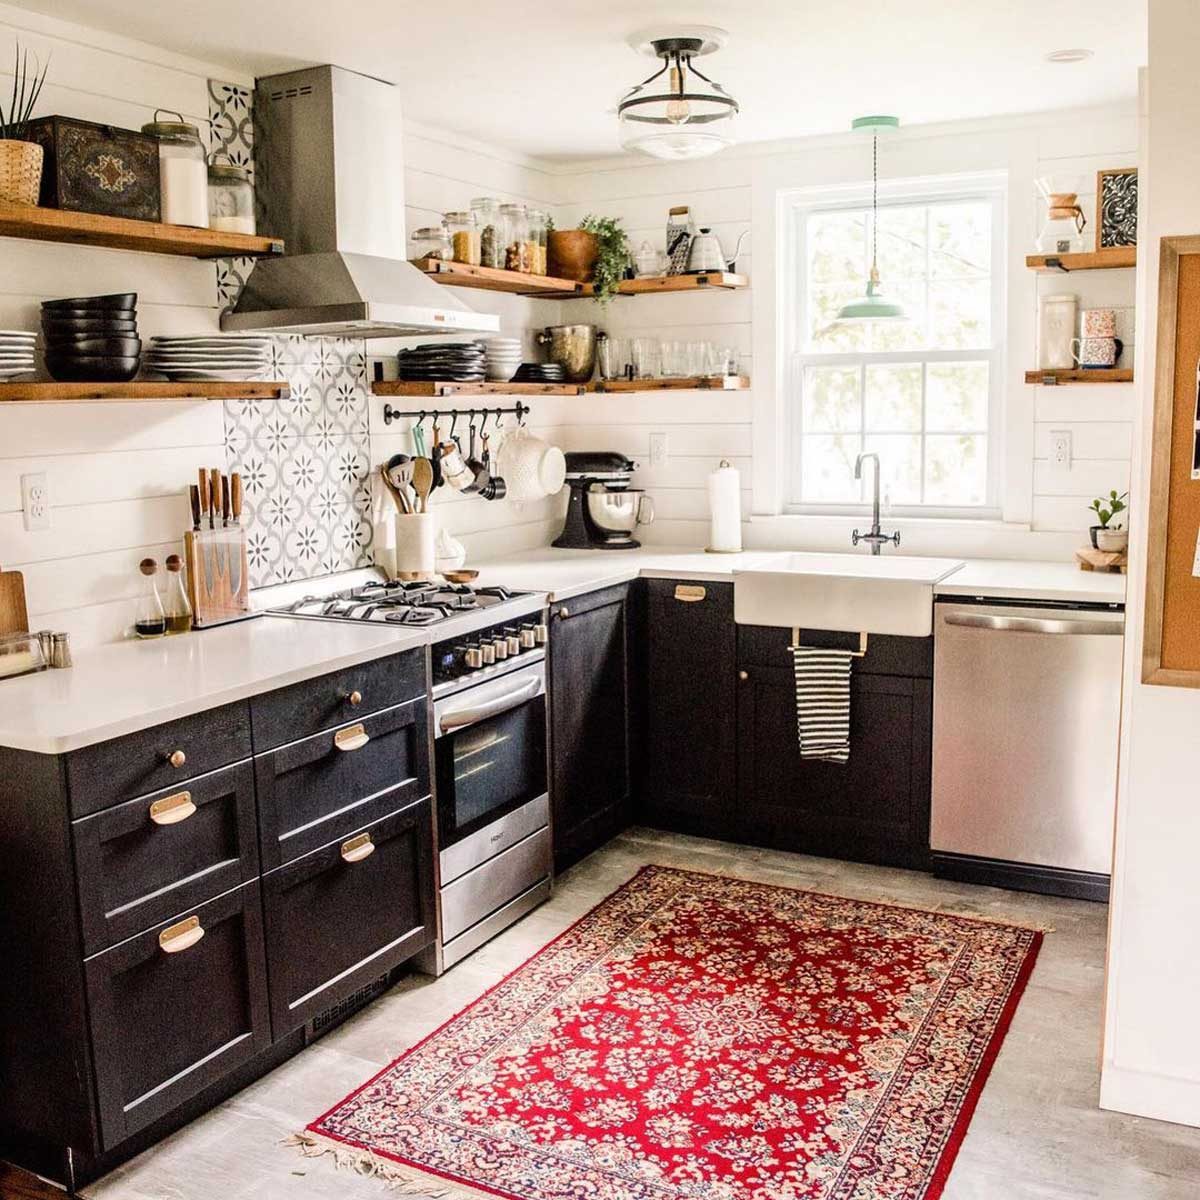 16 Small Kitchen Decor Ideas & Pictures